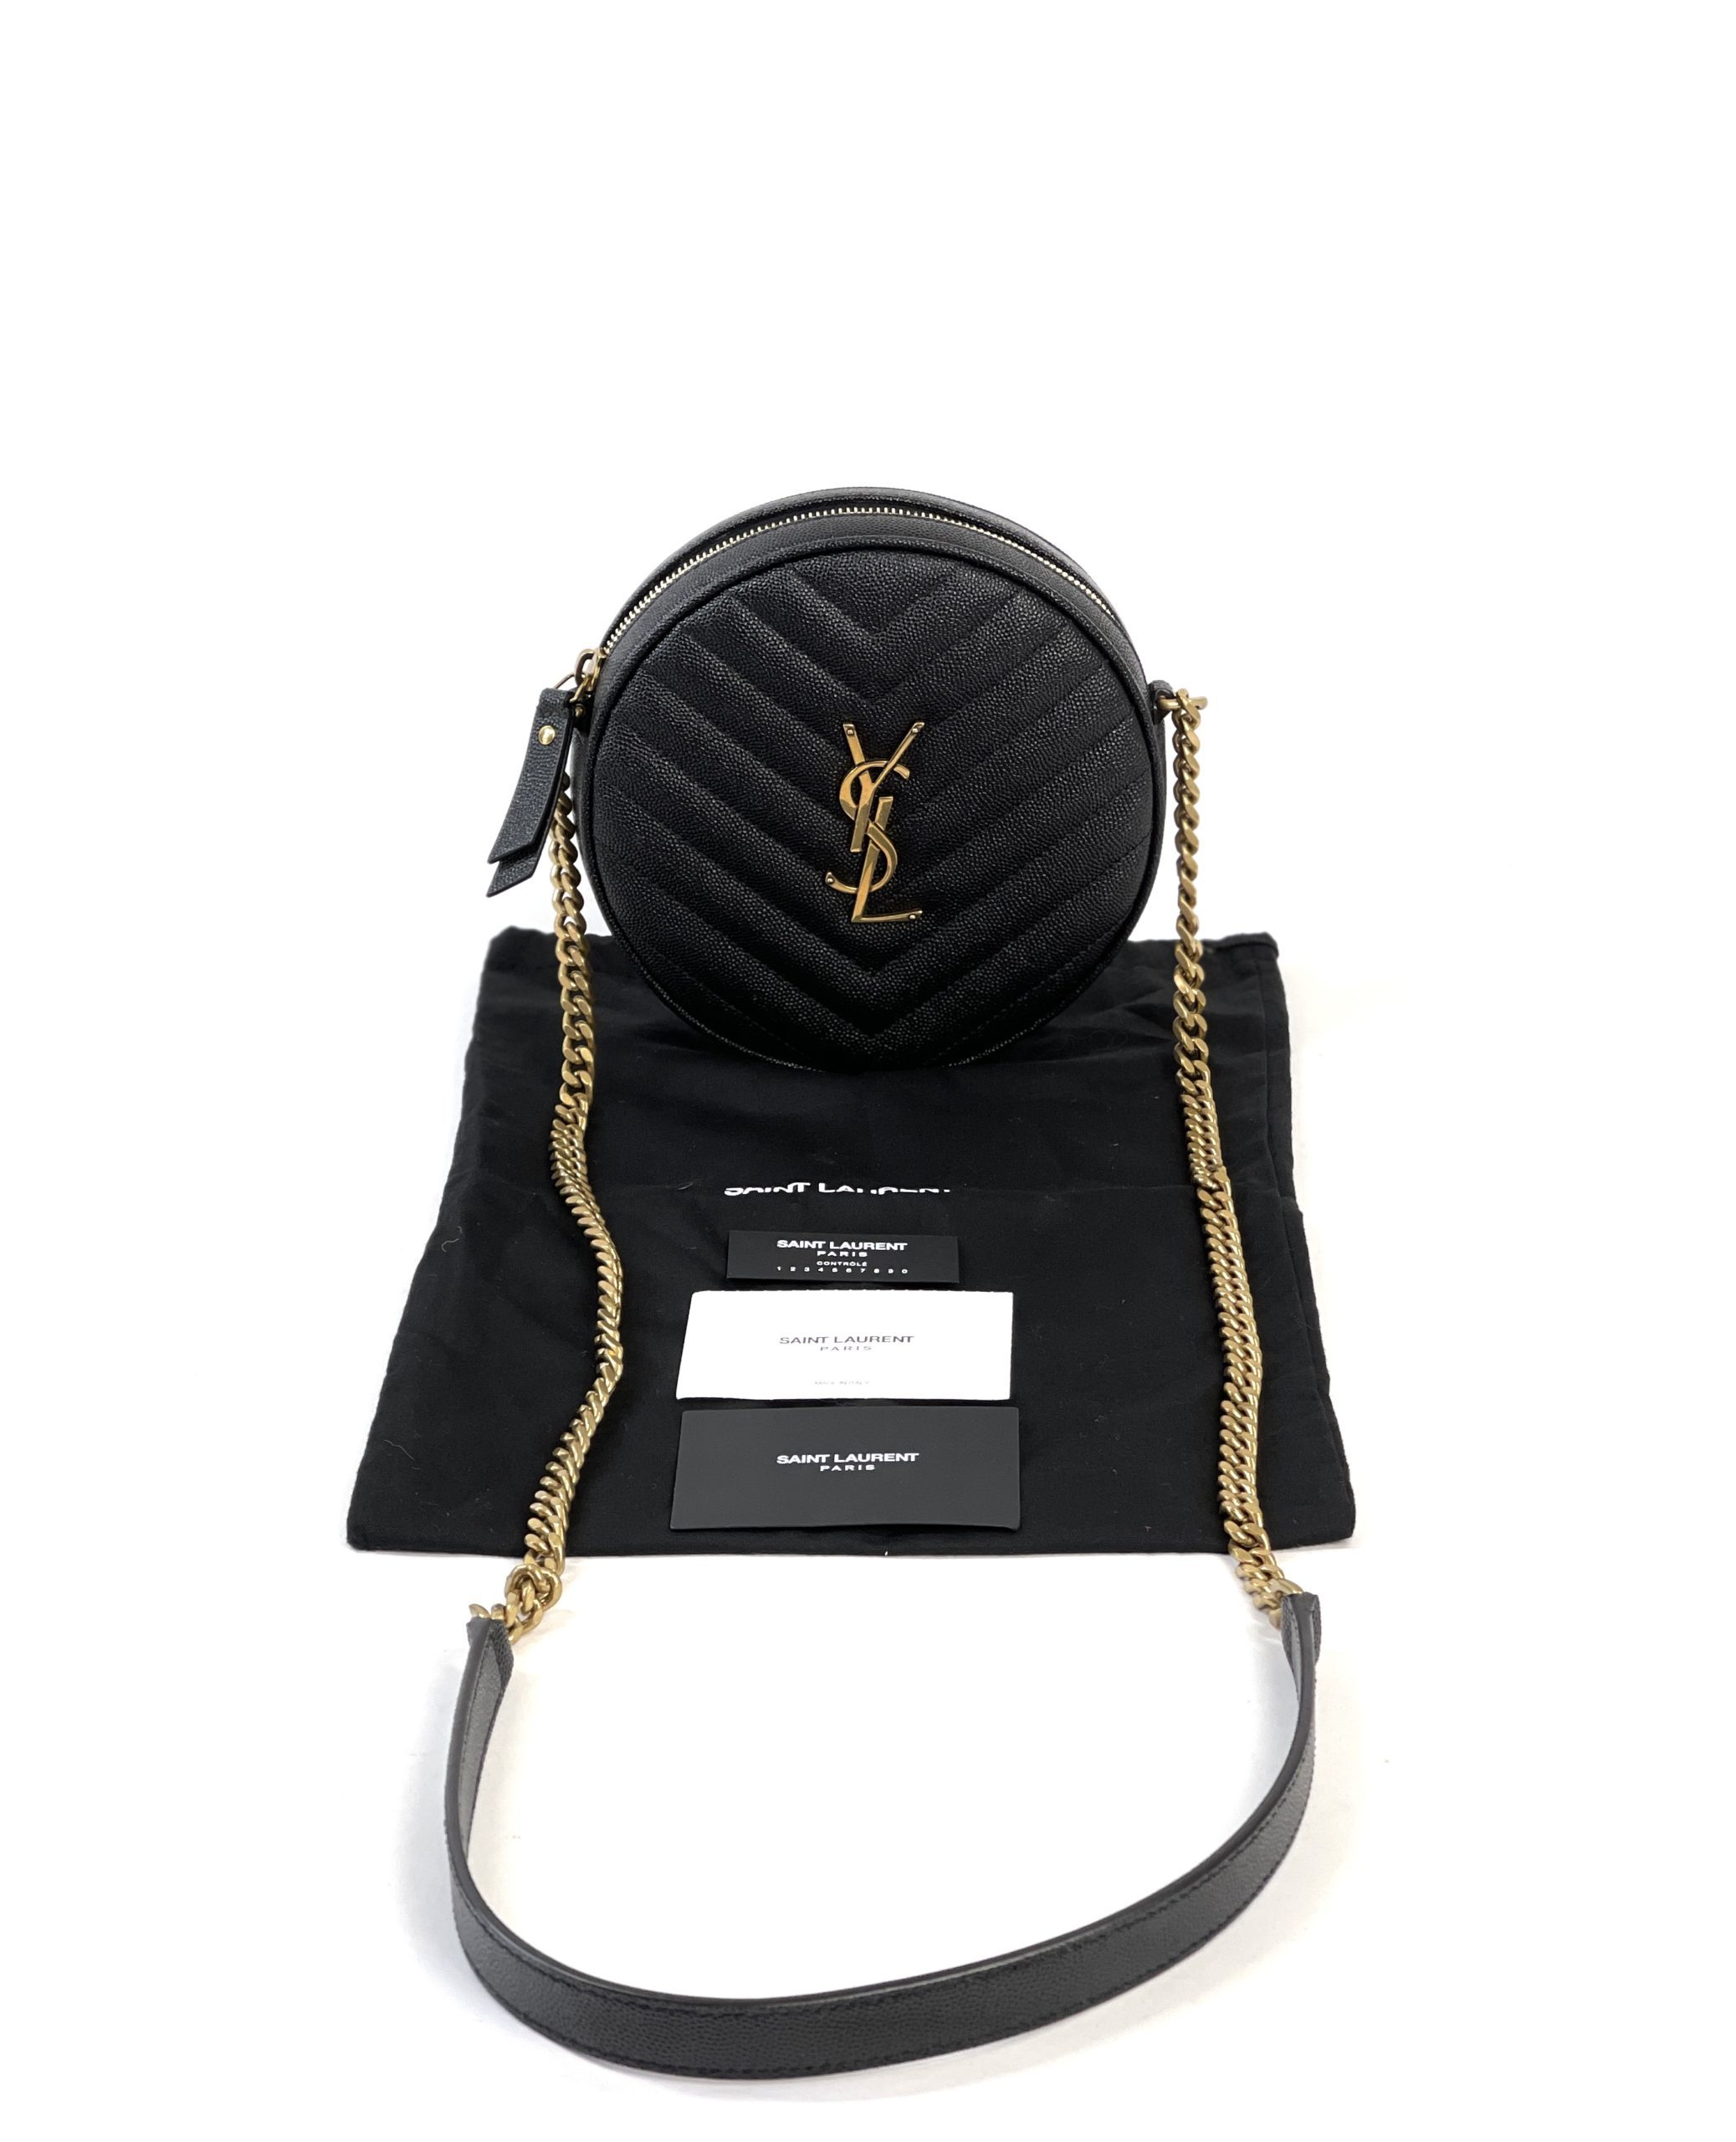 Louis Vuitton Vernis Mirror Bag Charm Amarante - A World Of Goods For You,  LLC